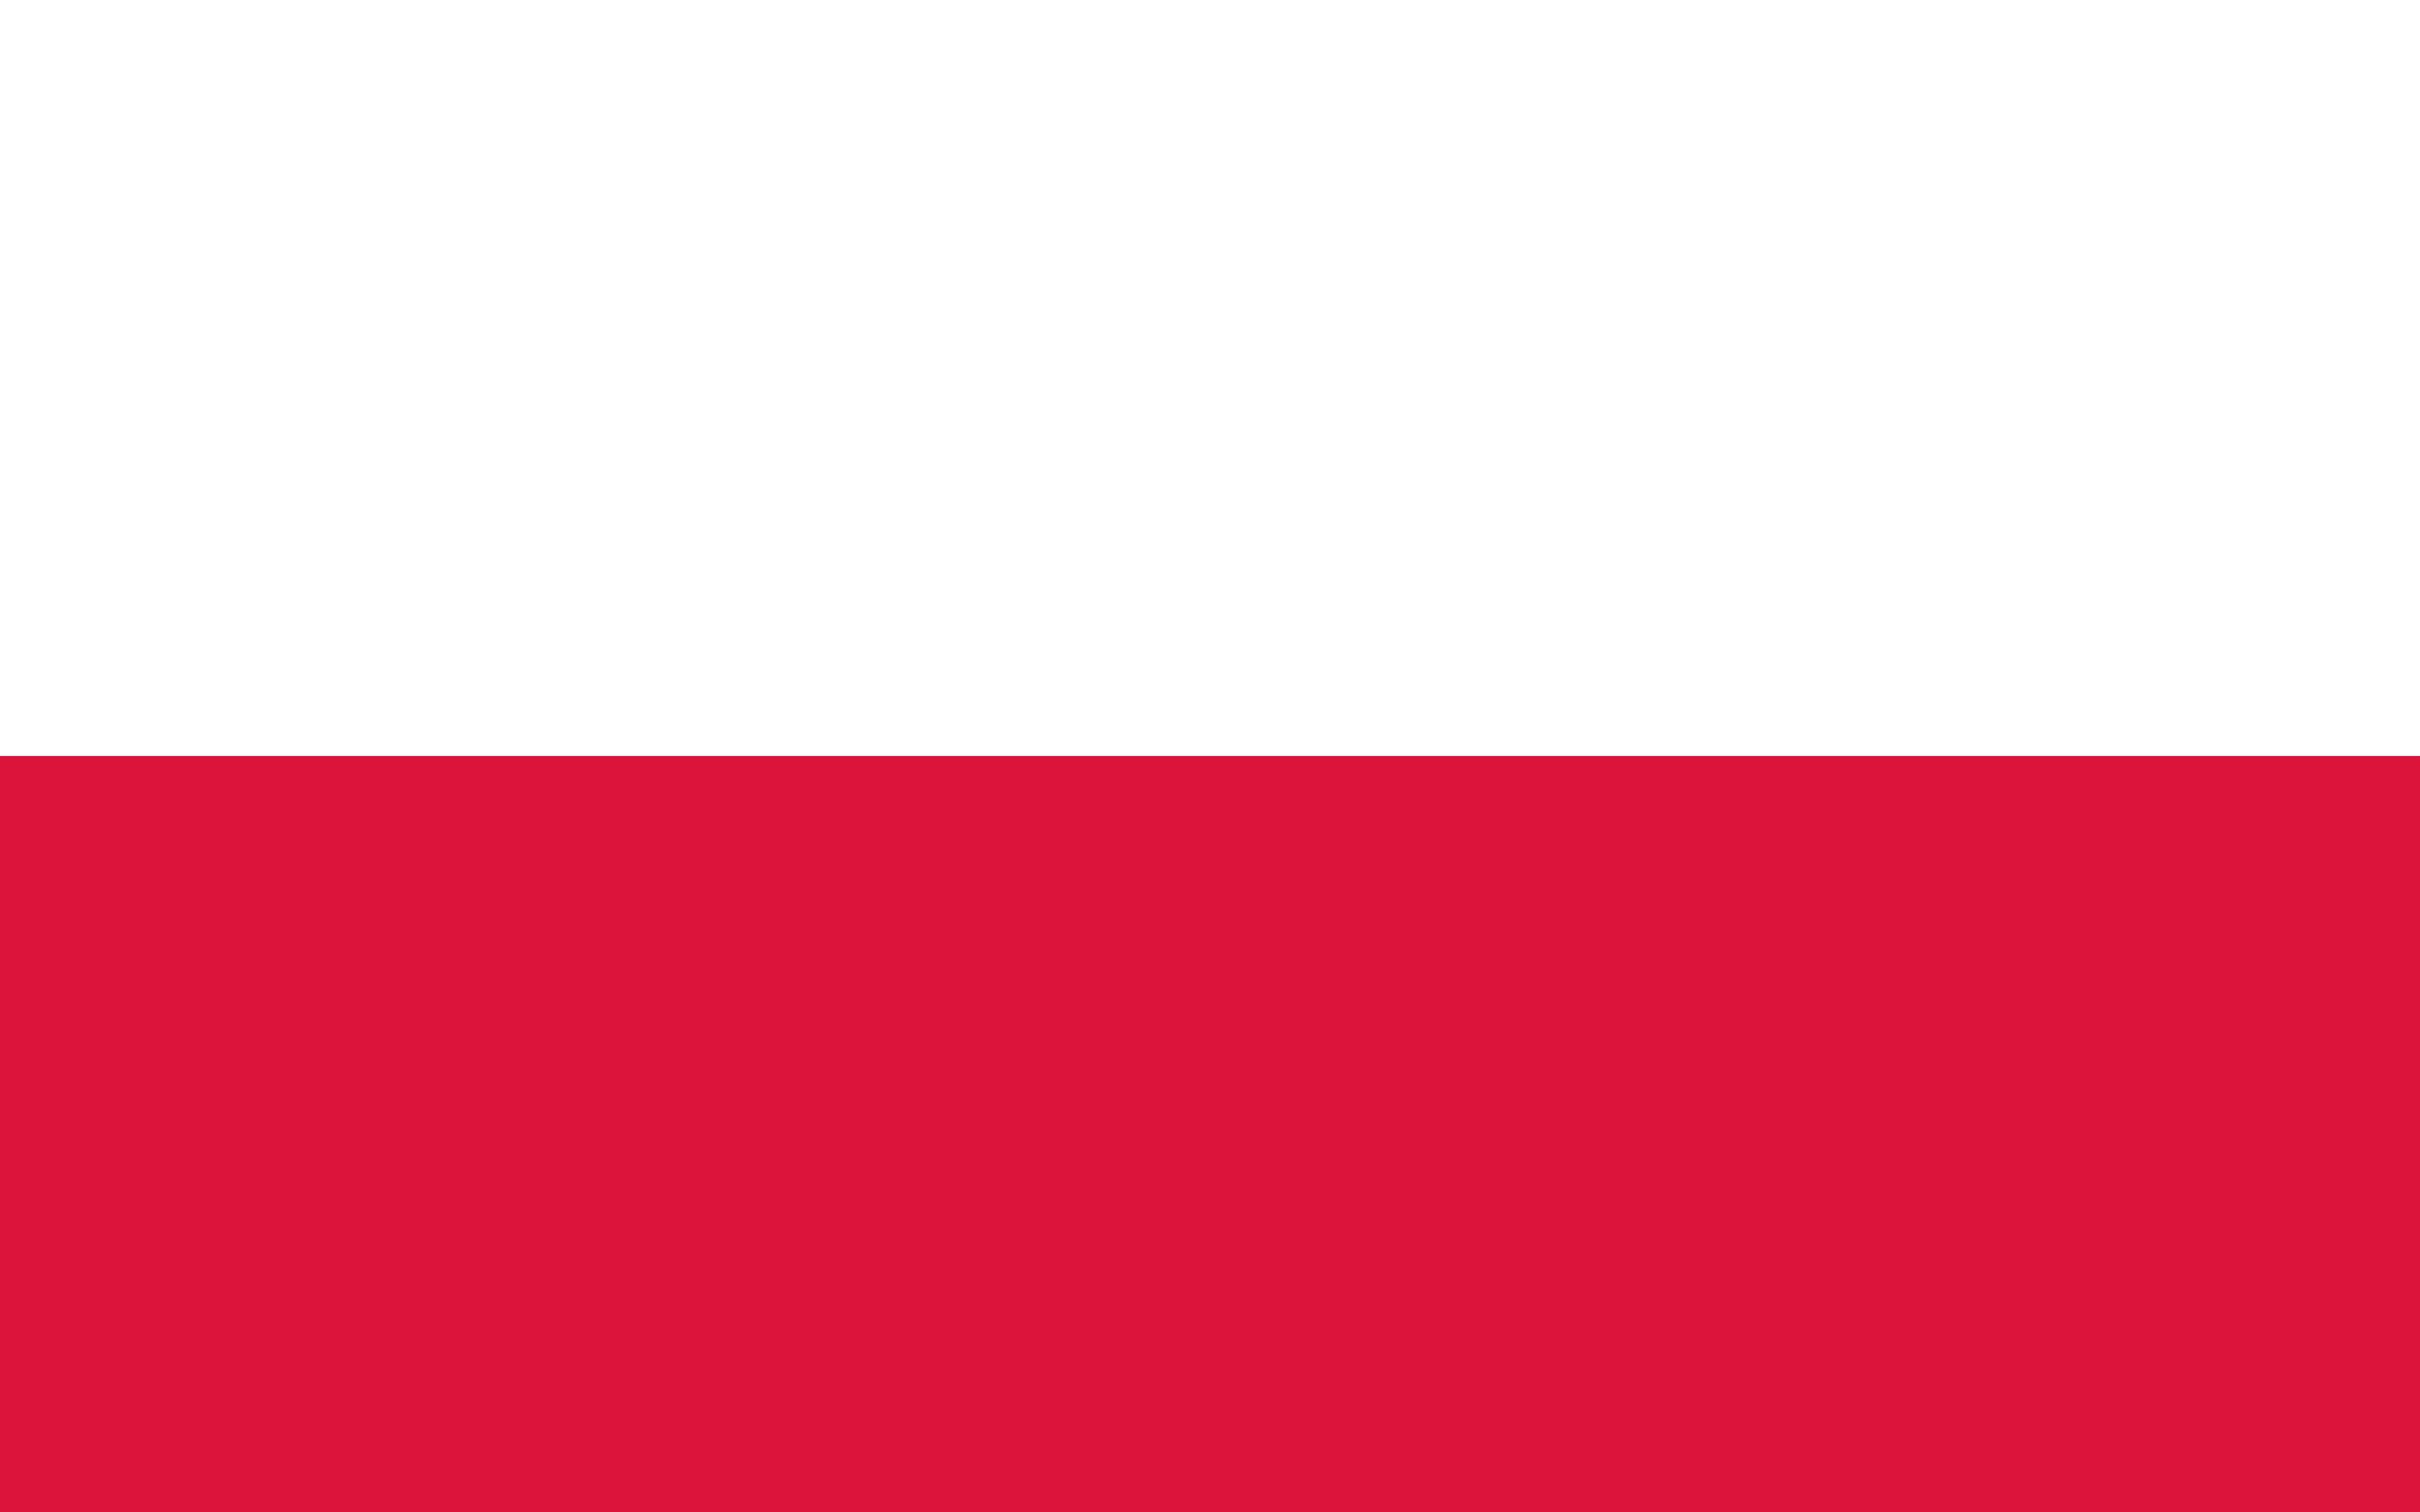 Free Poland Flag Documents: PDF, DOC, DOCX, HTML & More!